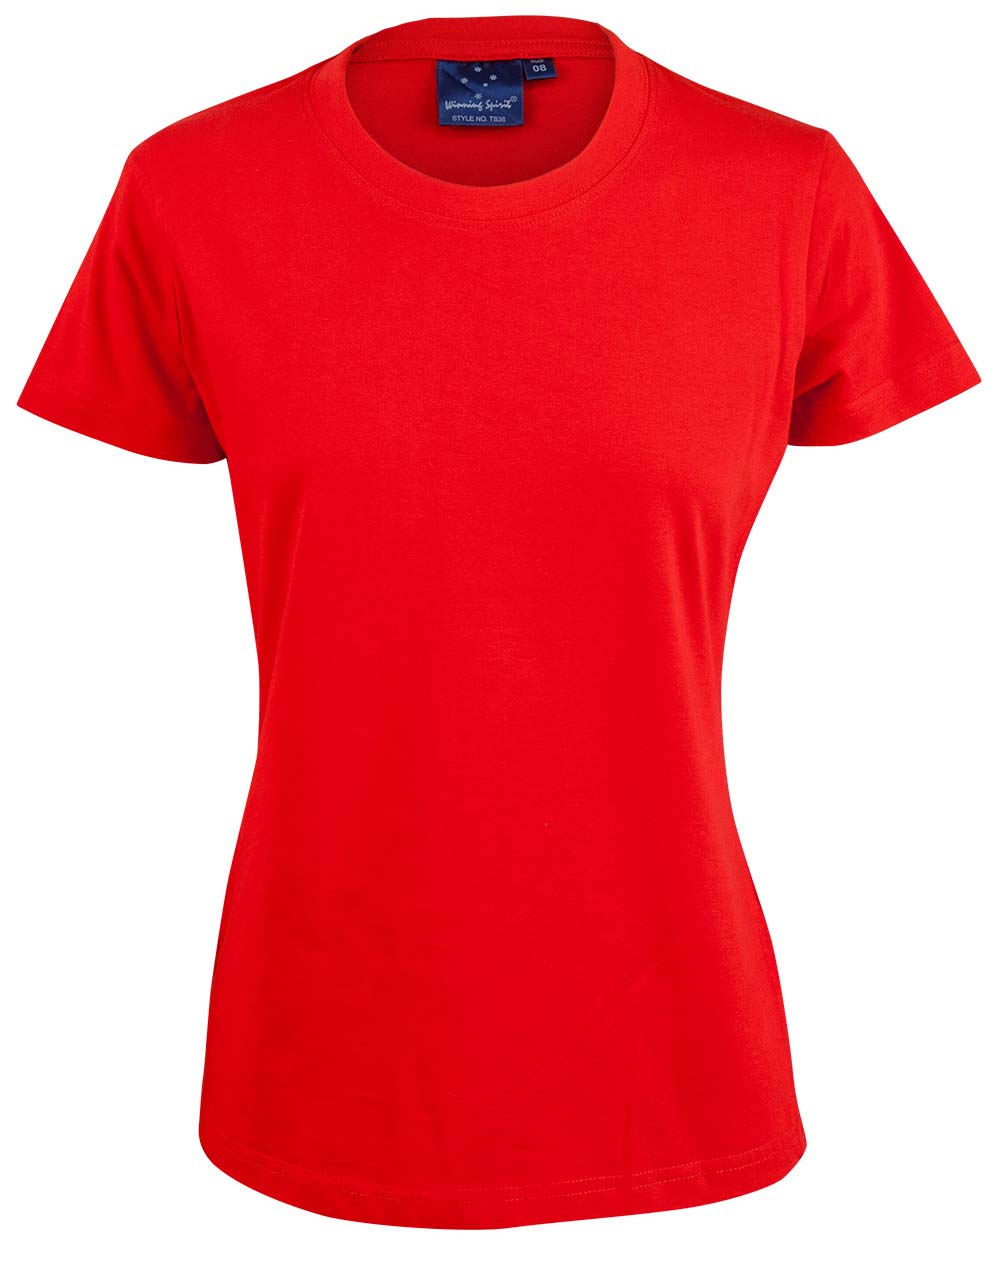 Women's cotton tee shirt red